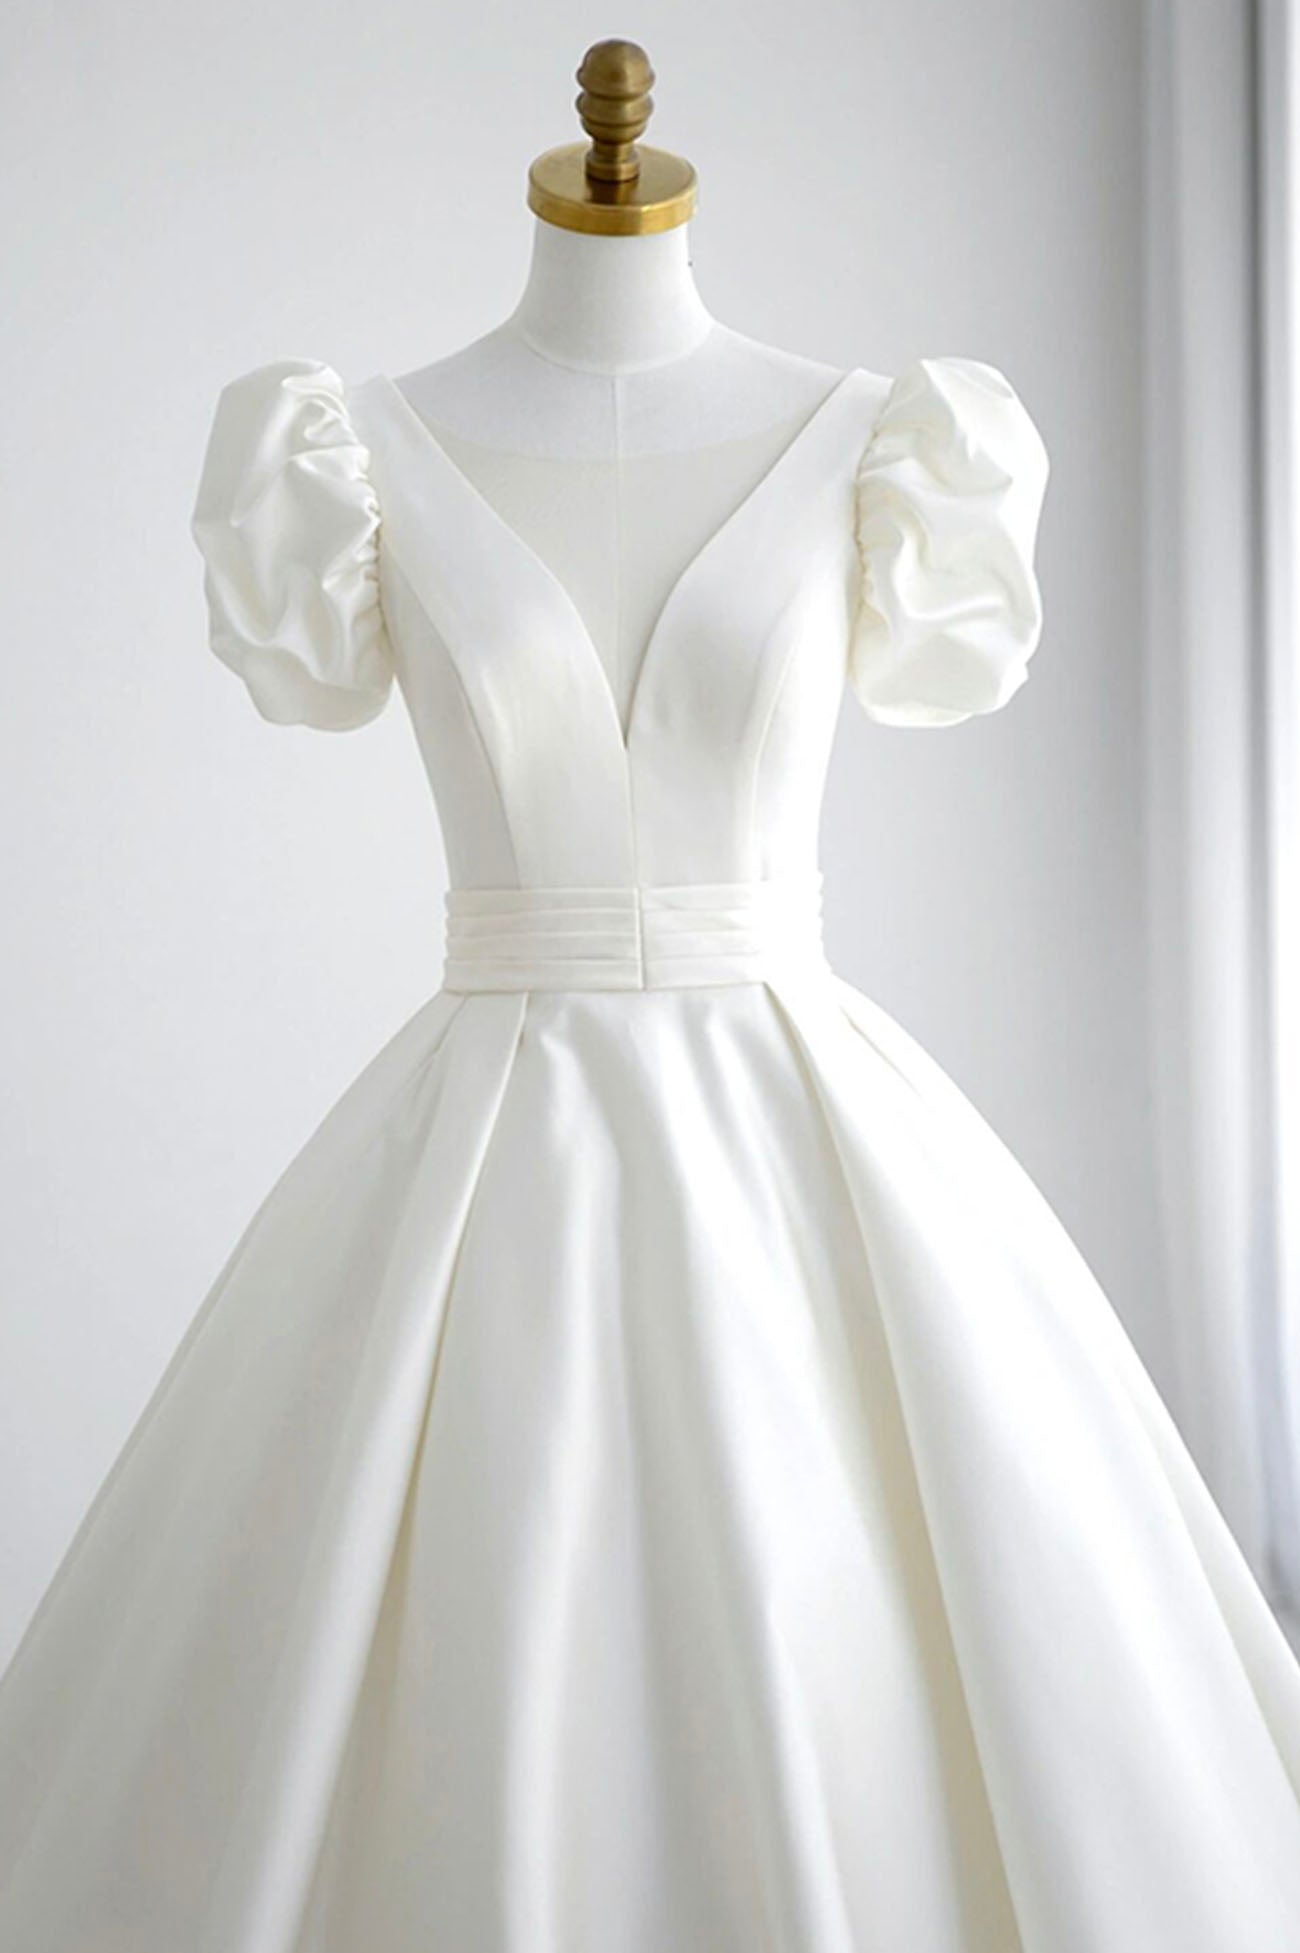 Homecomming Dresses With Sleeves, White V-Neck Satin Long Prom Dress, A-Line Short Sleeve Formal Dress